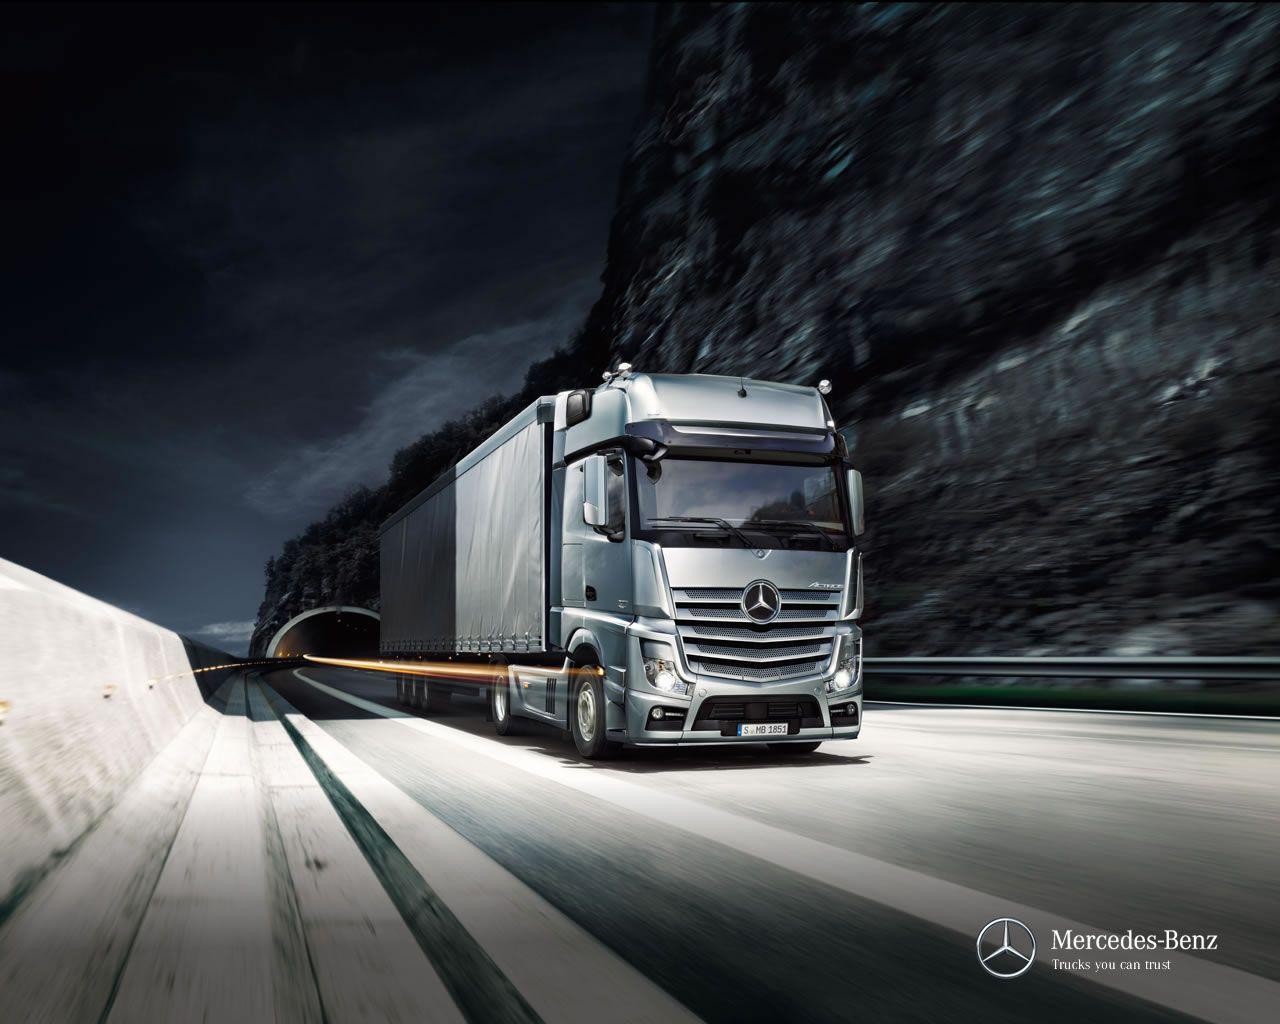 Mercedes Benz Trucks. The World Of Mercedes Benz AMG